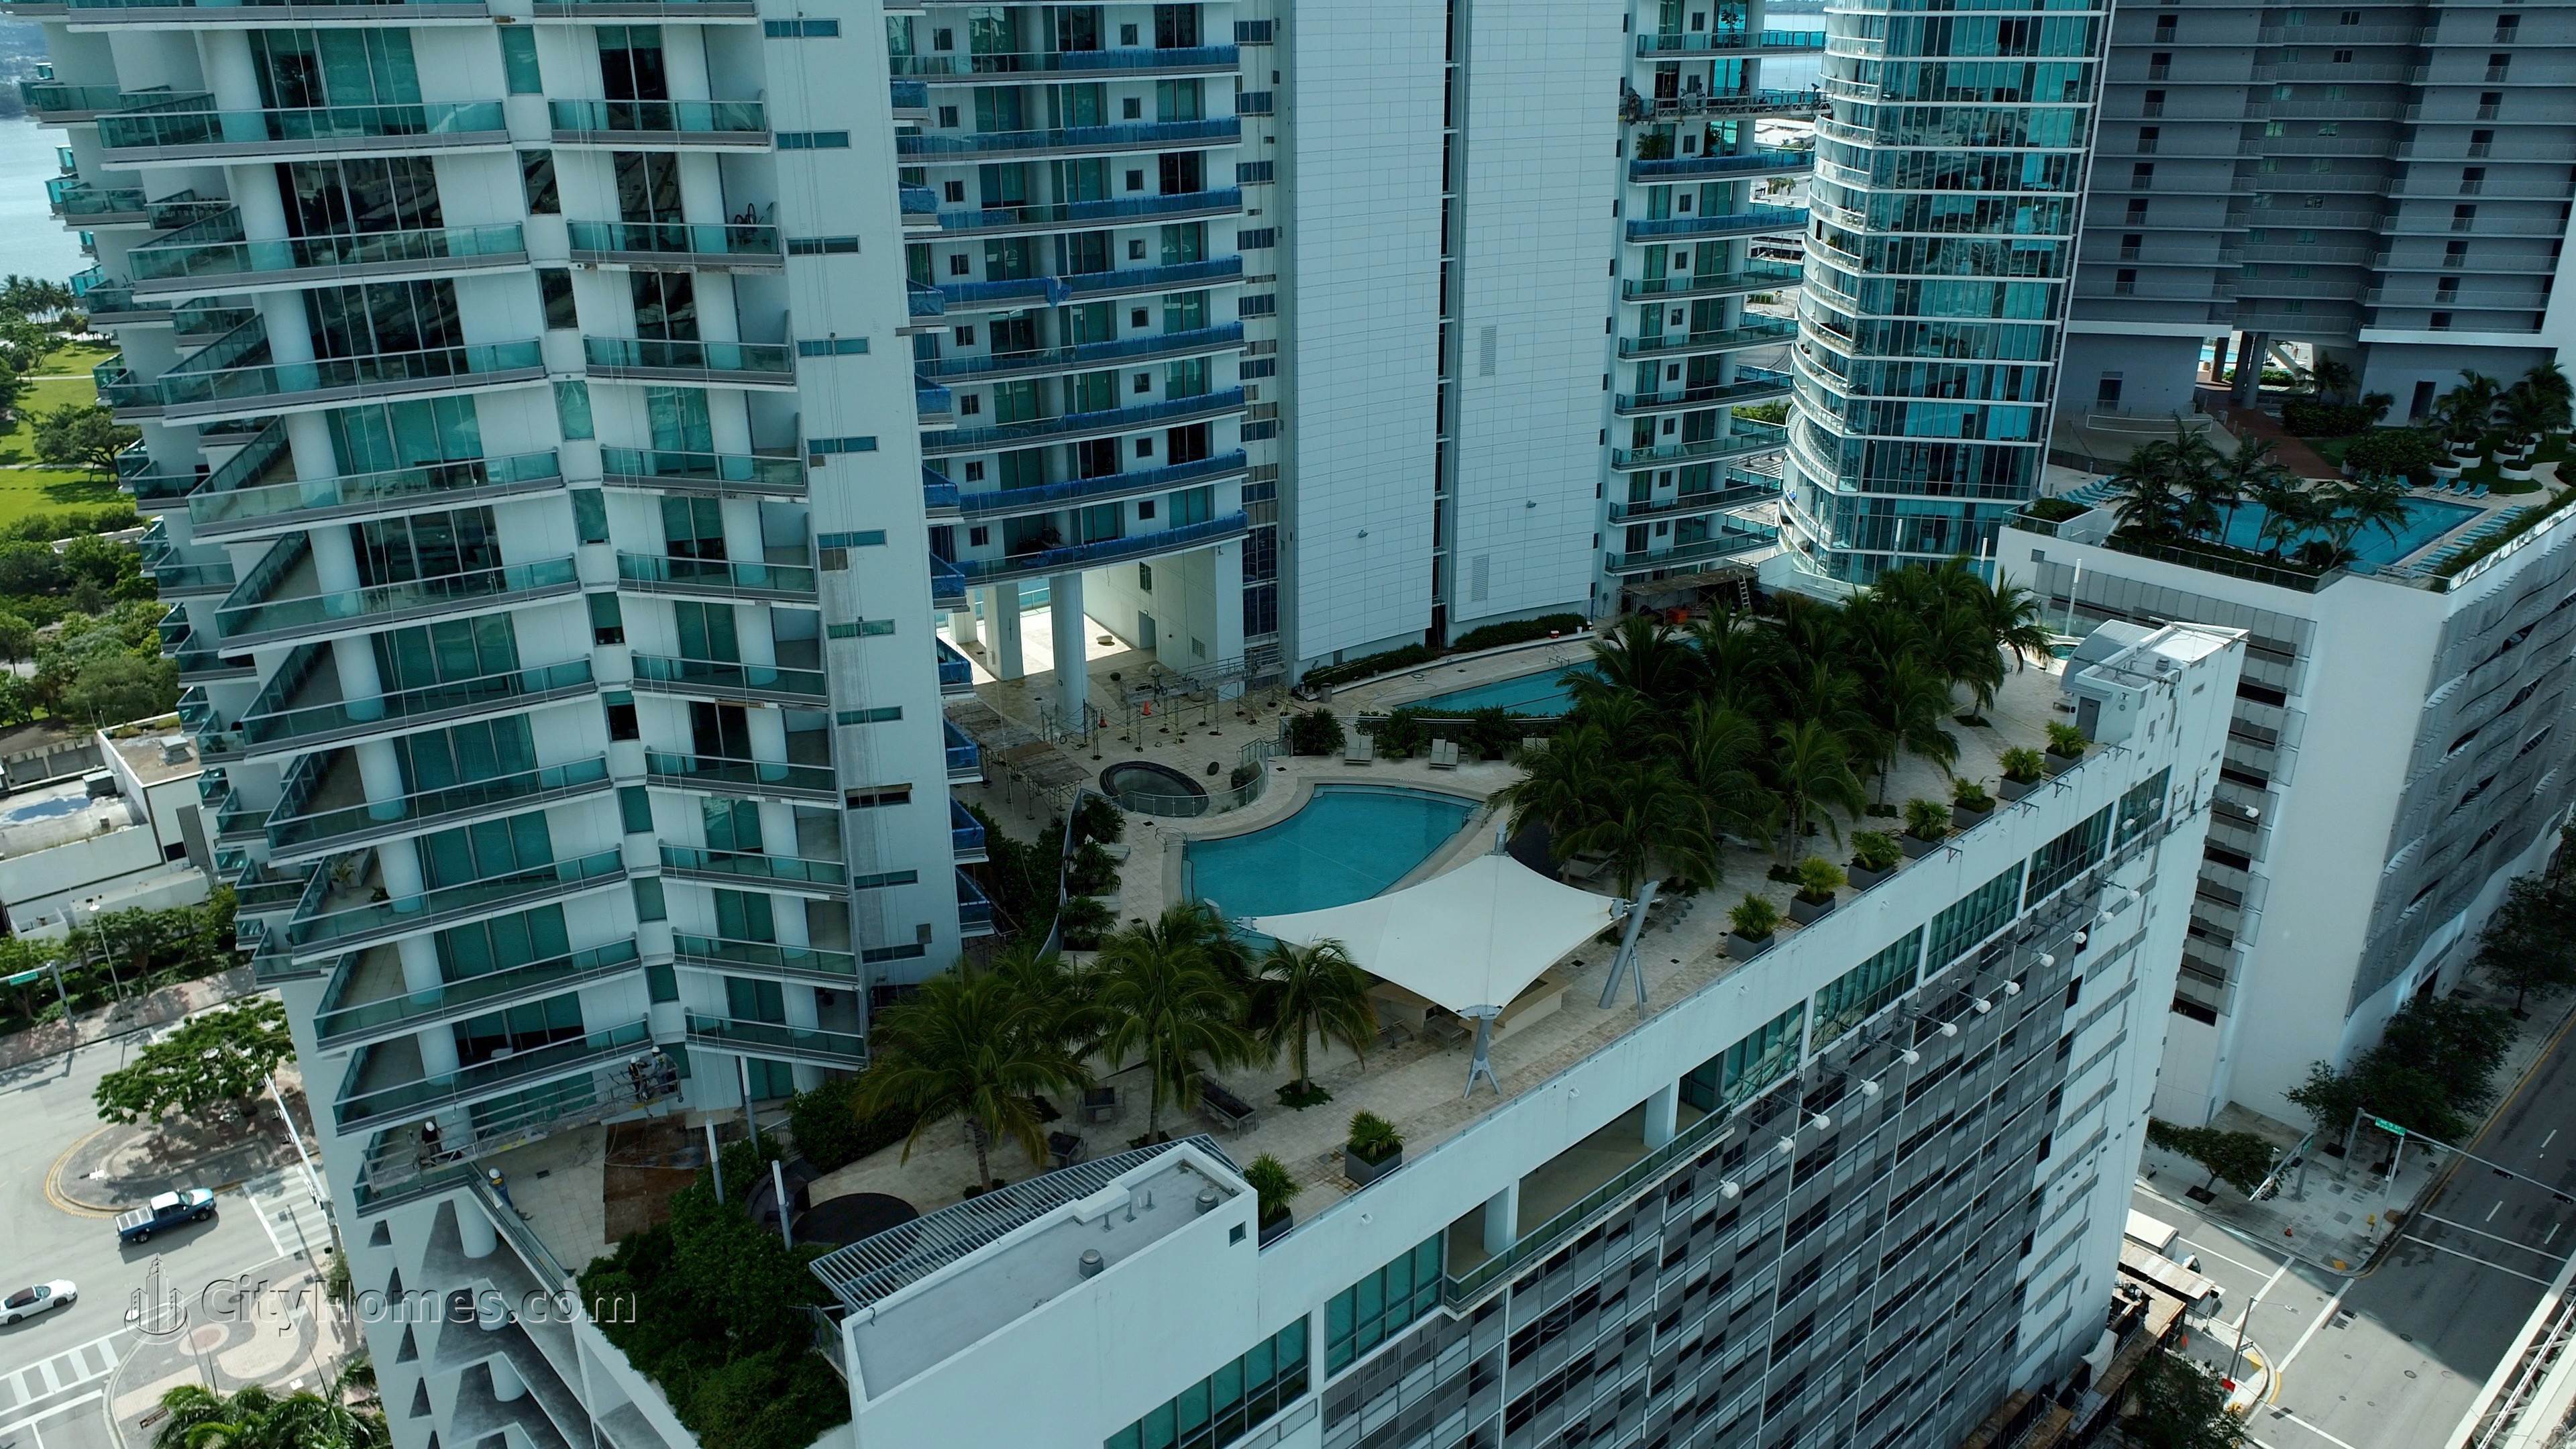 5. 900 Biscayne Bay здание в 900 Biscayne Boulevard, Miami, FL 33132